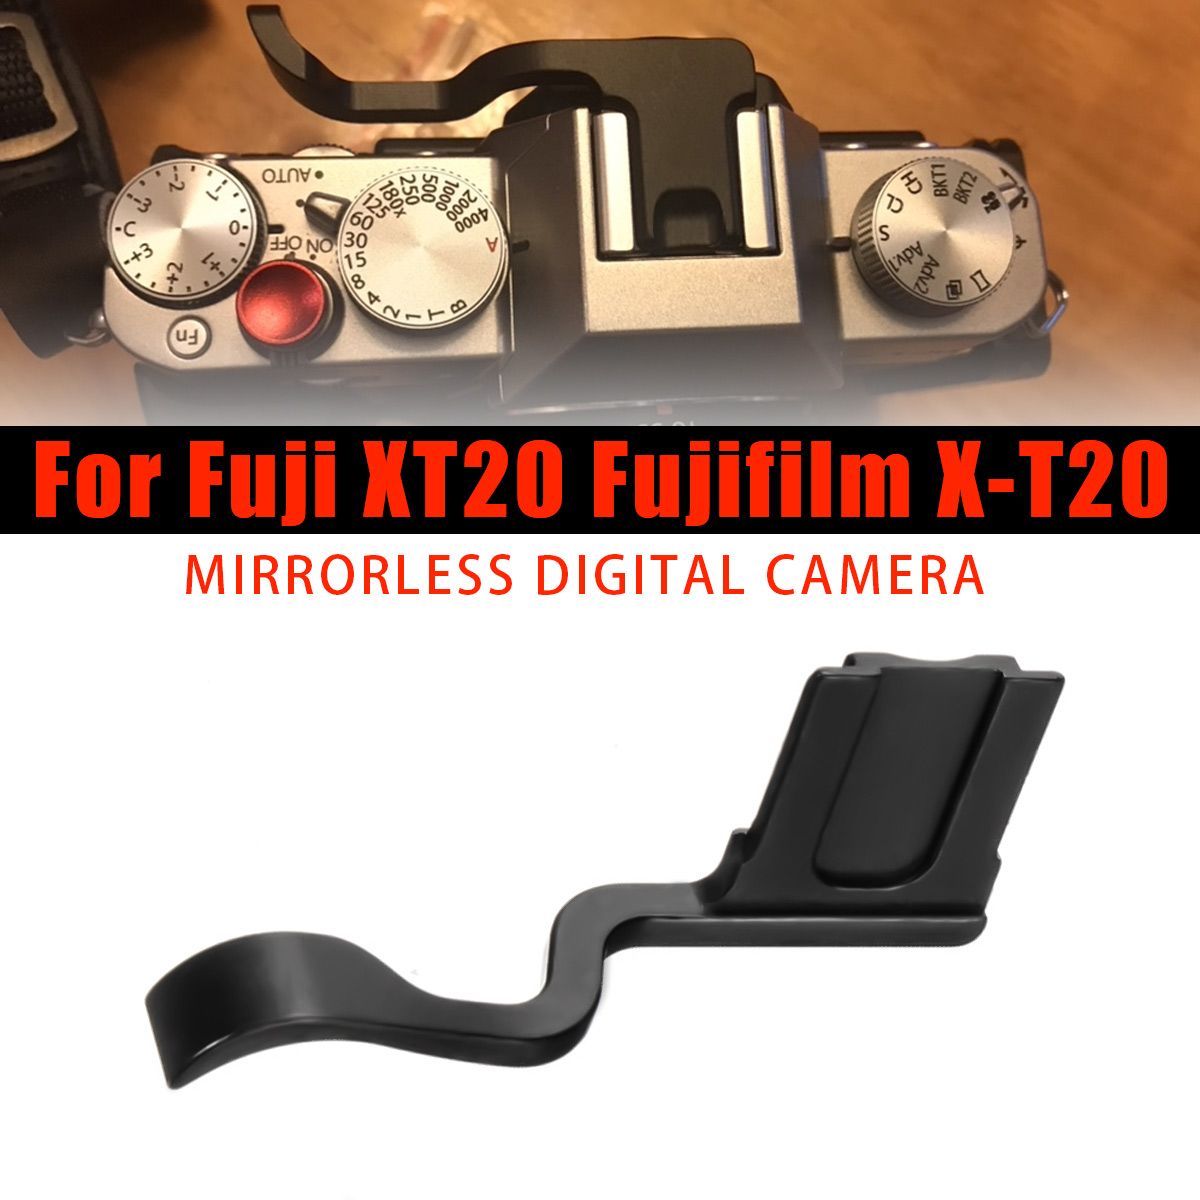 Durable-Thumb-Rest-Grip-Replacement-Accessories-For-Fuji-Fujifilm-XT20-Mirrorless-Digital-Camera-1348785